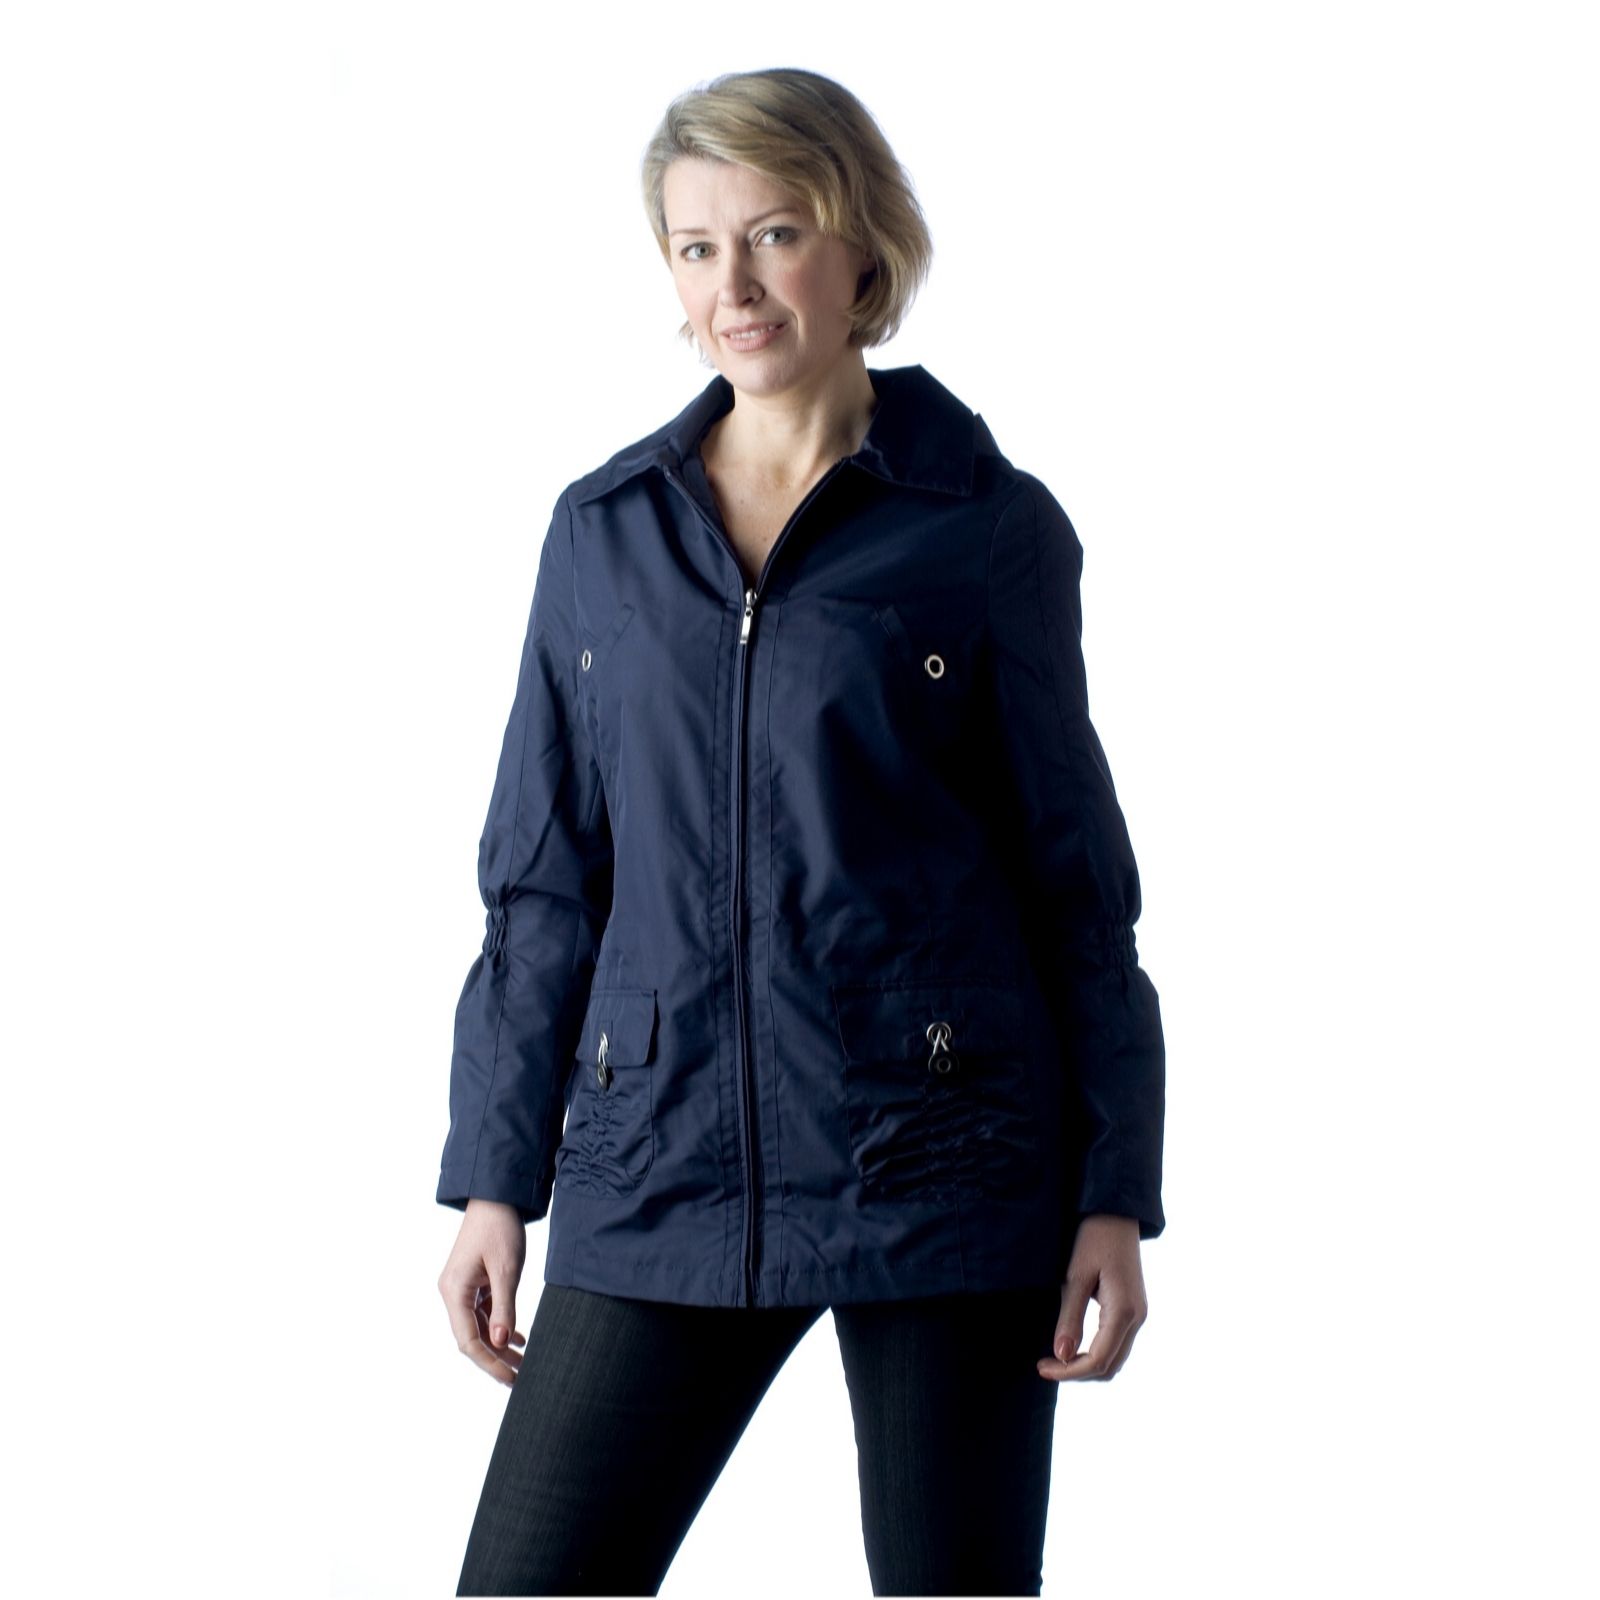 Centigrade Water Resistant Zip Front Jacket with Detachable Hood - QVC UK